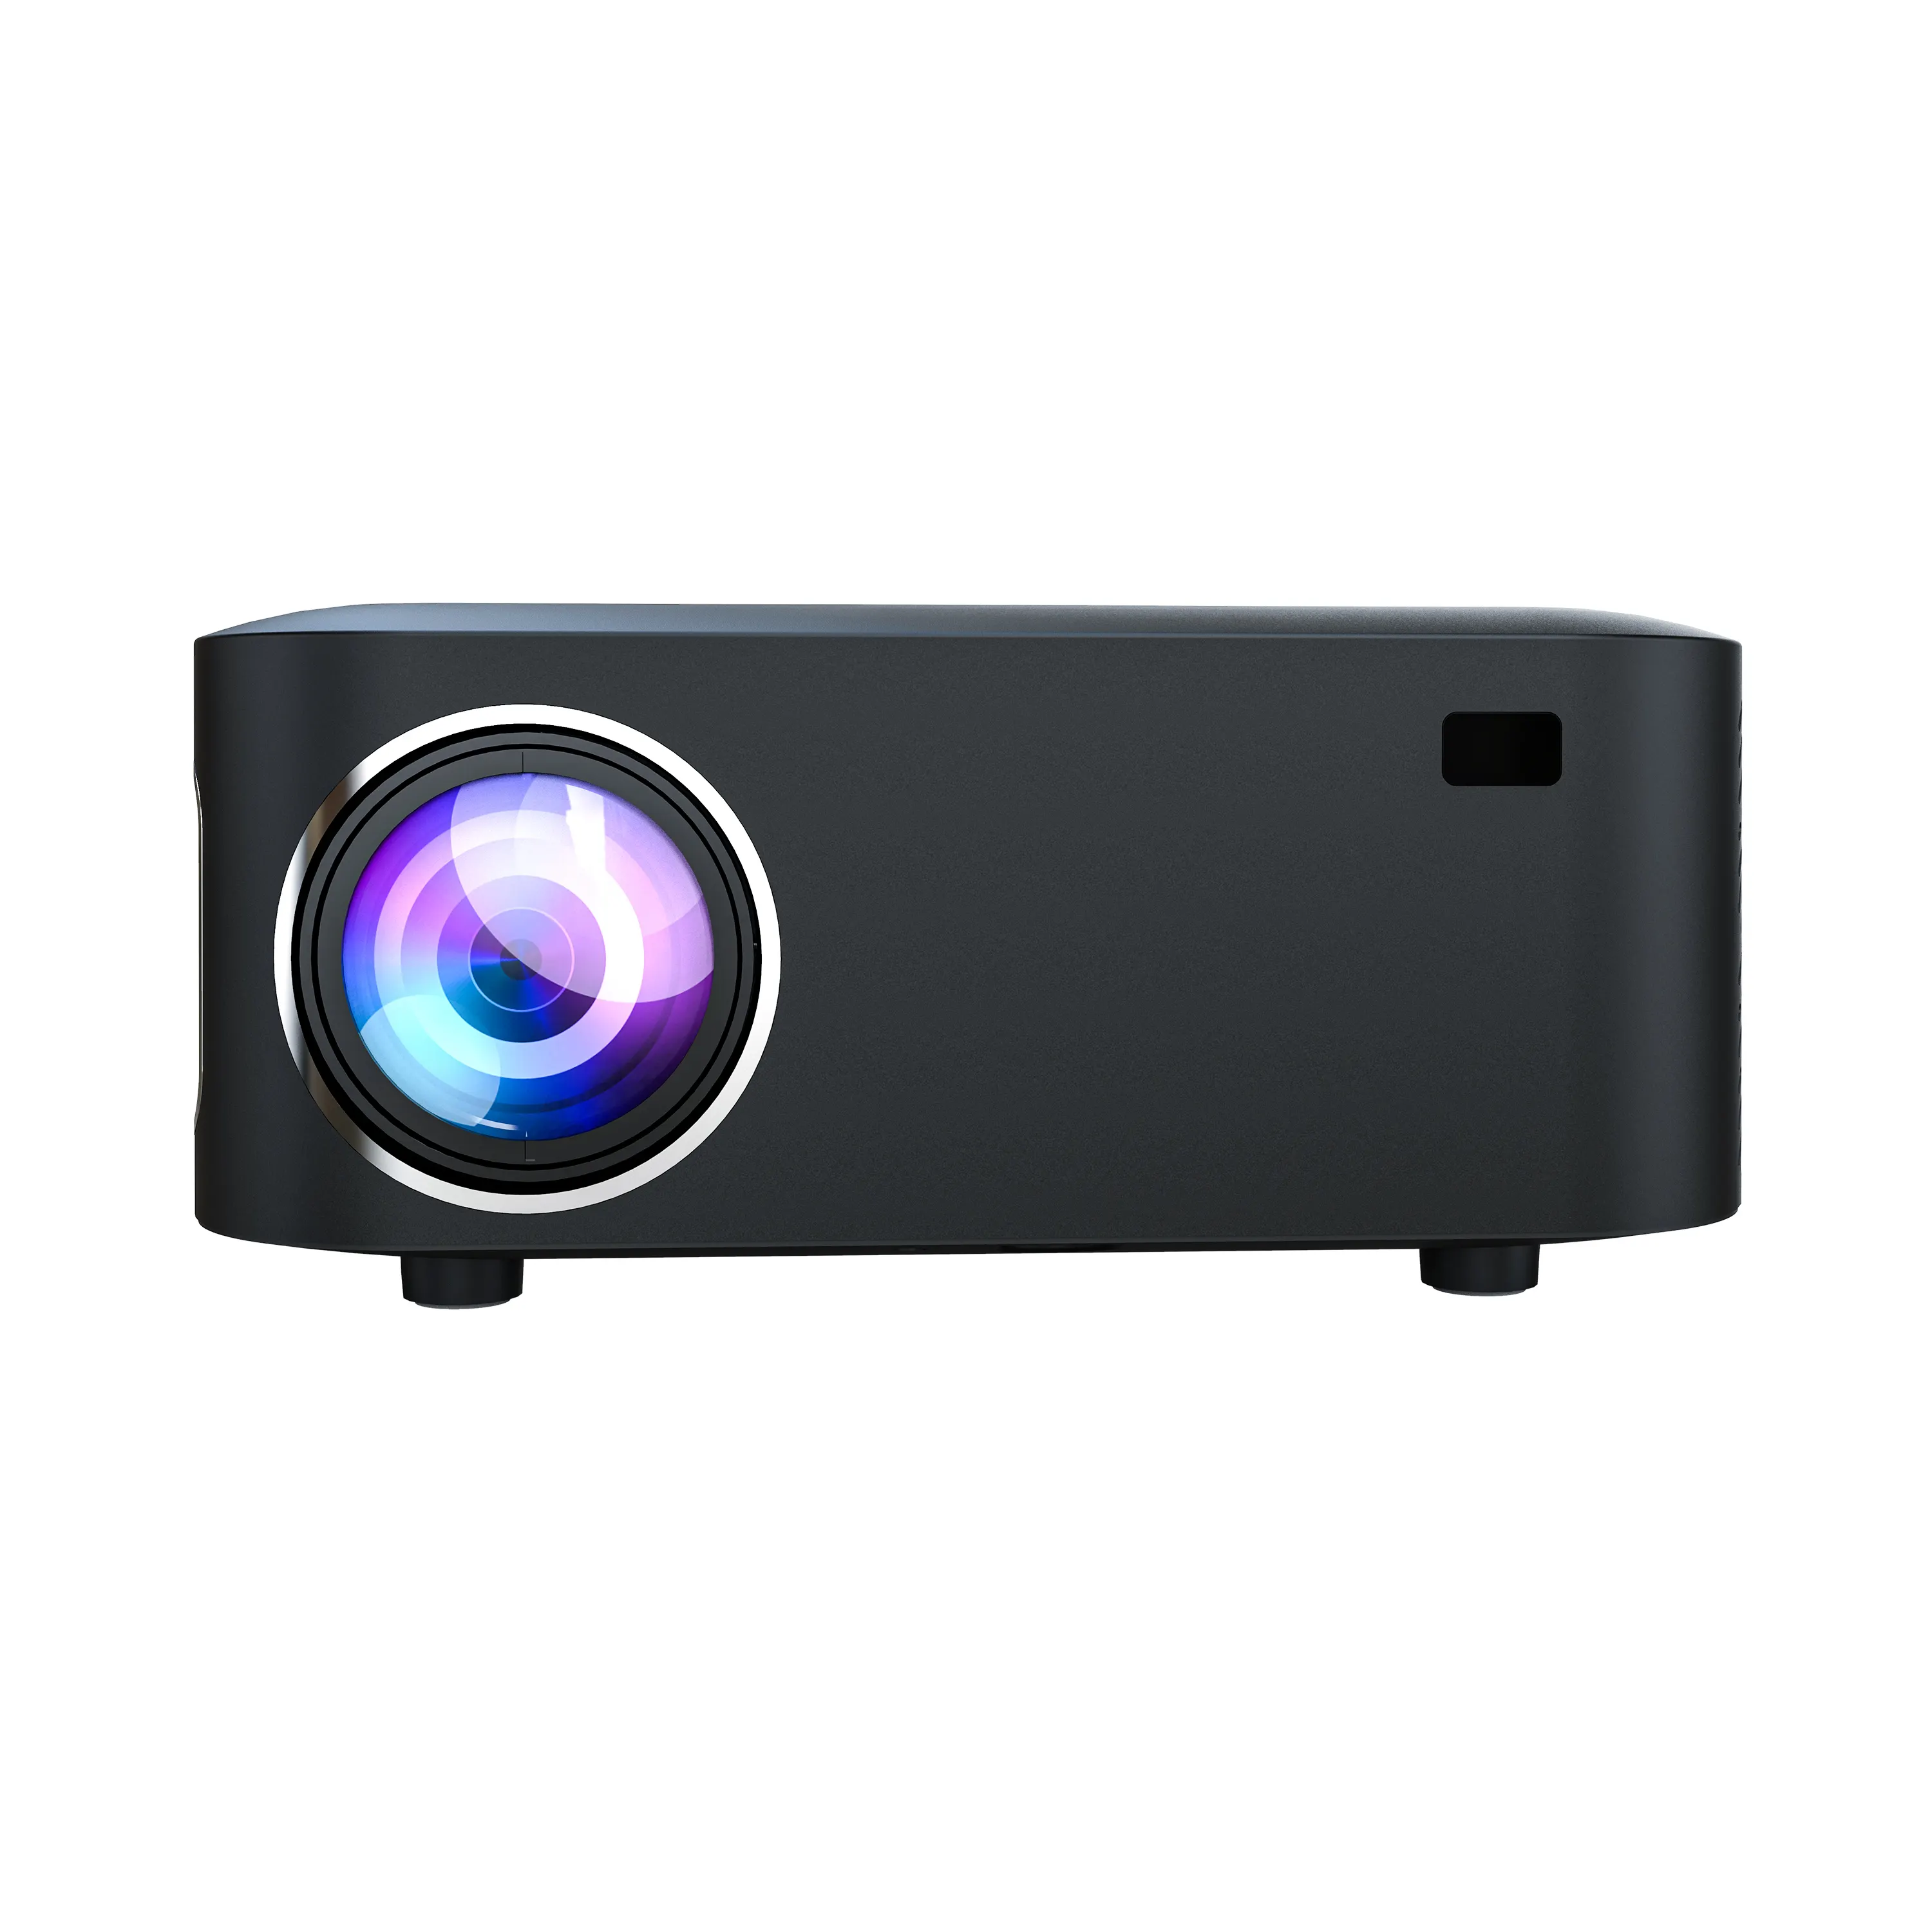 Sıcak satış projektör forfilm X5 projektör gerçek sinema sınıf ALPD lazer Ultra parlak 4500 lümen 30-300 inç 4K projektör